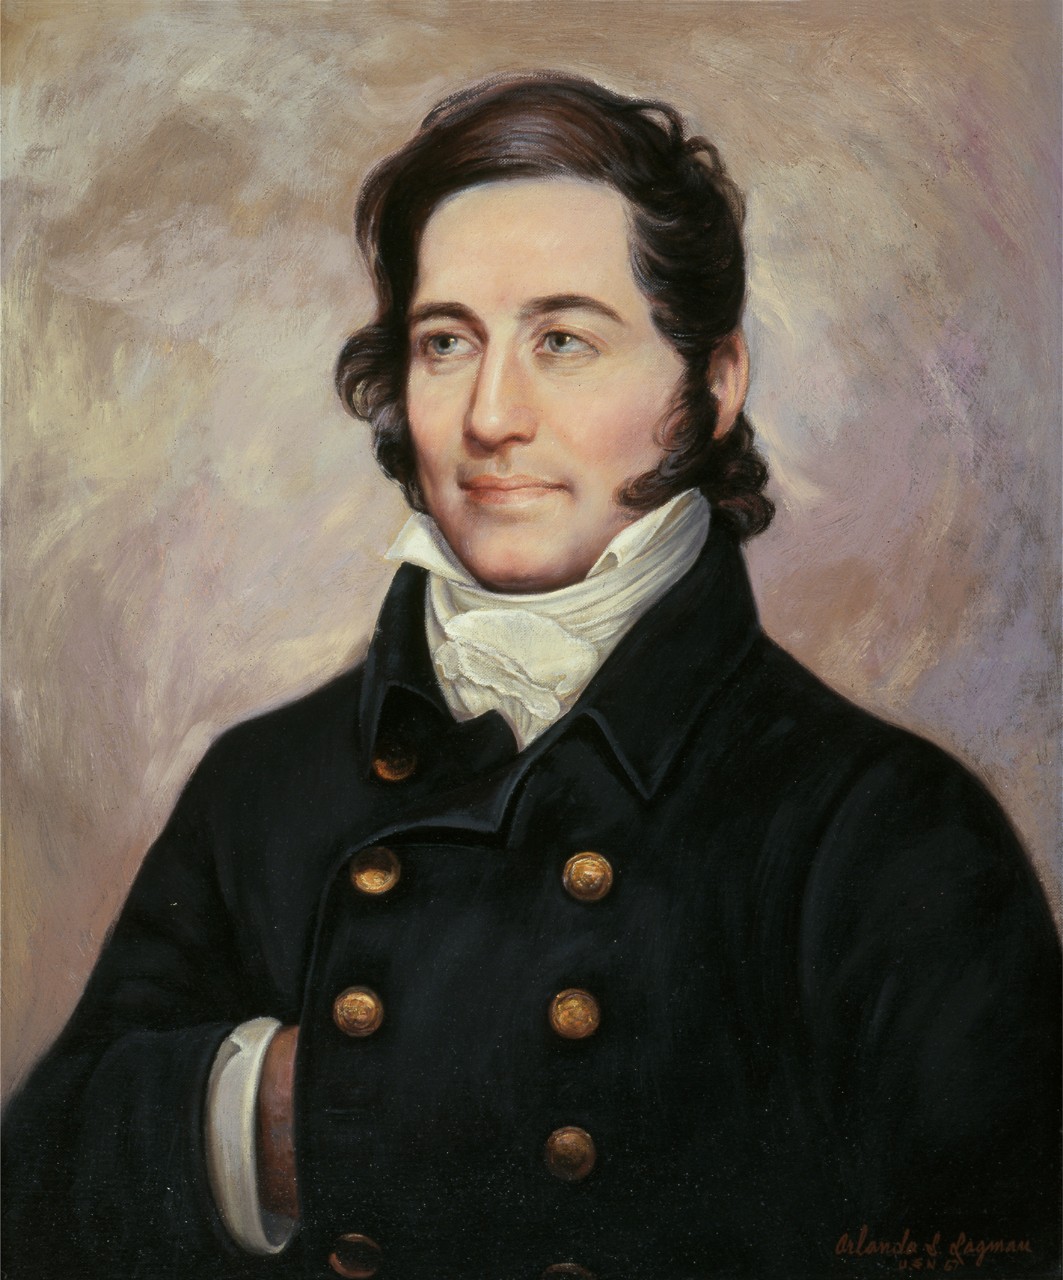 Portrait of Captain Samuel Reid with his hand in his jacket